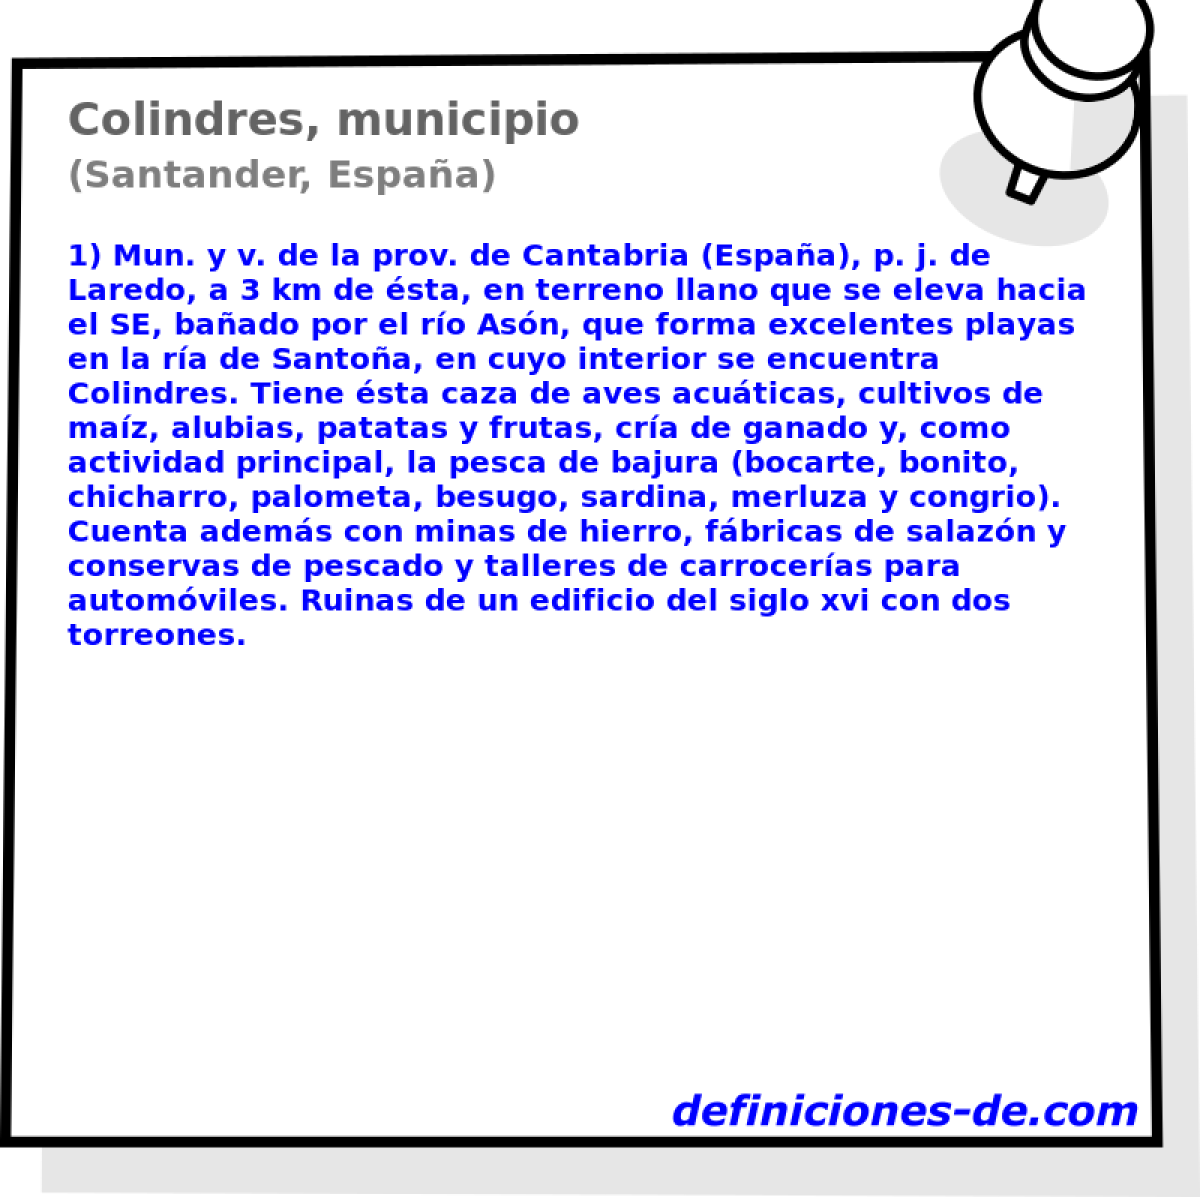 Colindres, municipio (Santander, Espaa)